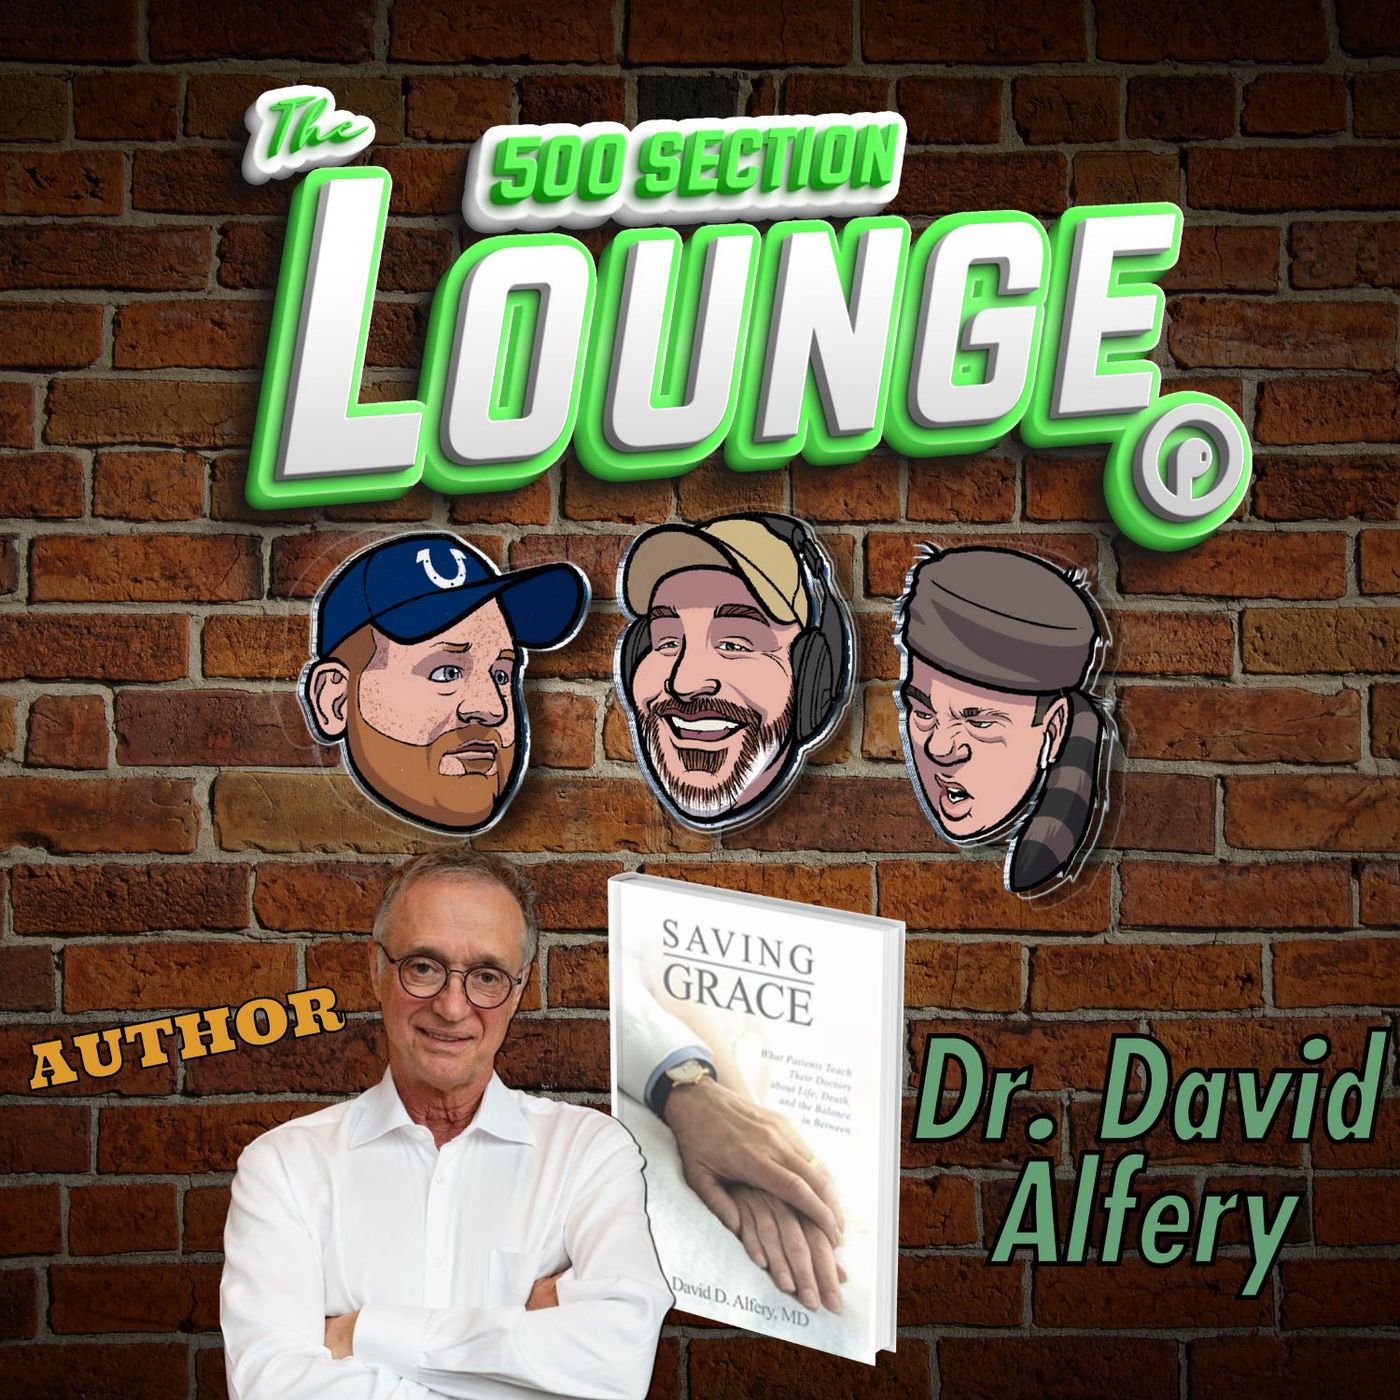 E159: Dr. David Alfery Makes a House Call In the Lounge!